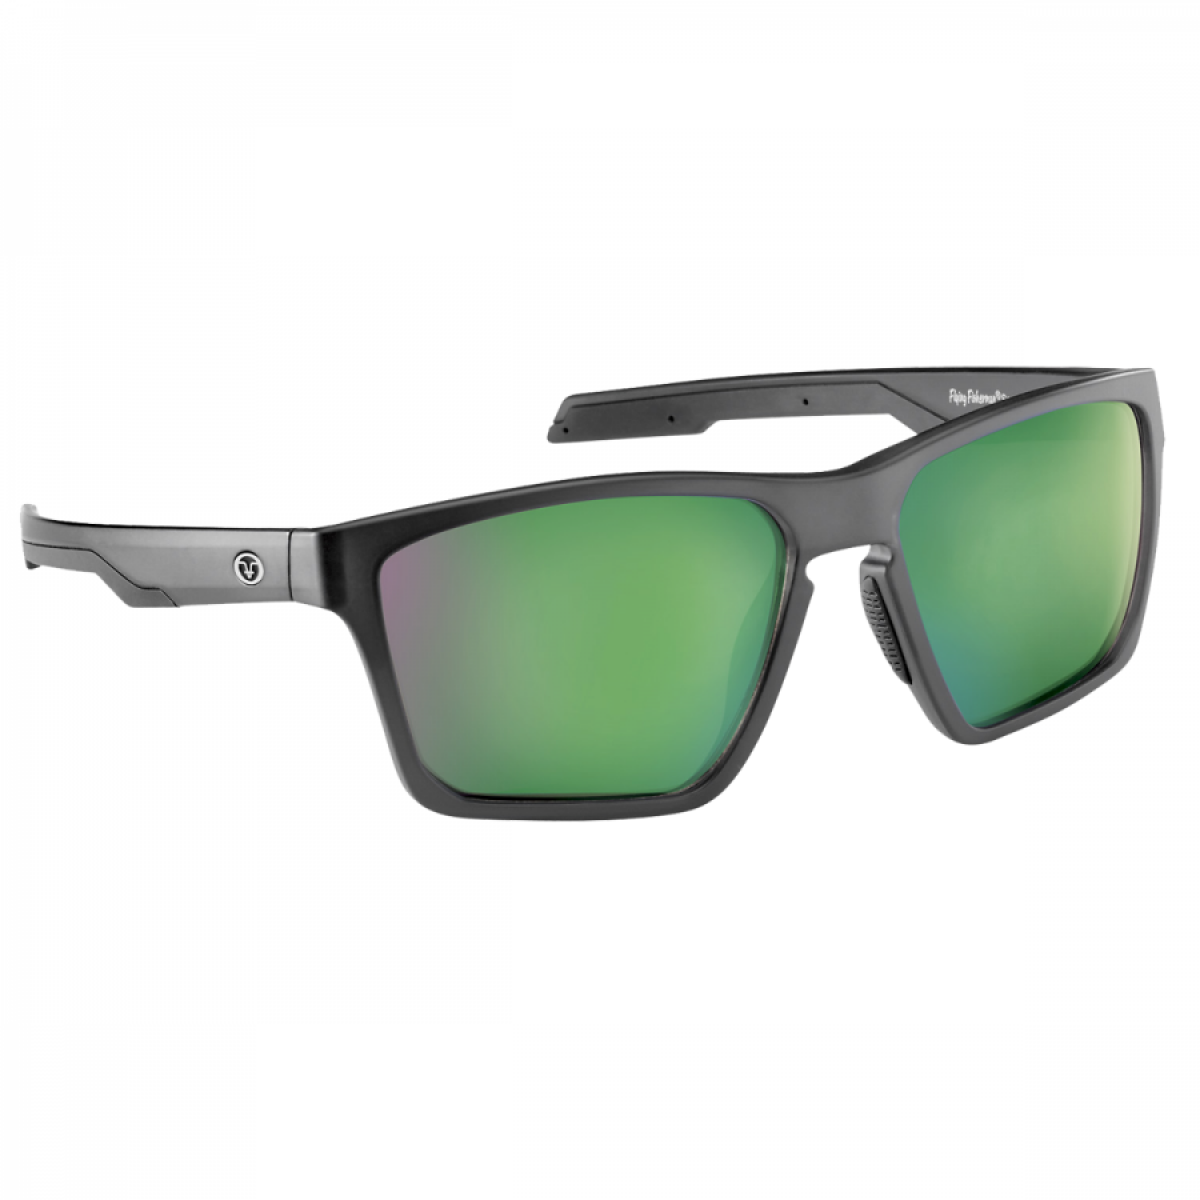 Flying Fisherman Sandbar Polarized Sunglasses Smoke-Blue - Sportsman Gear